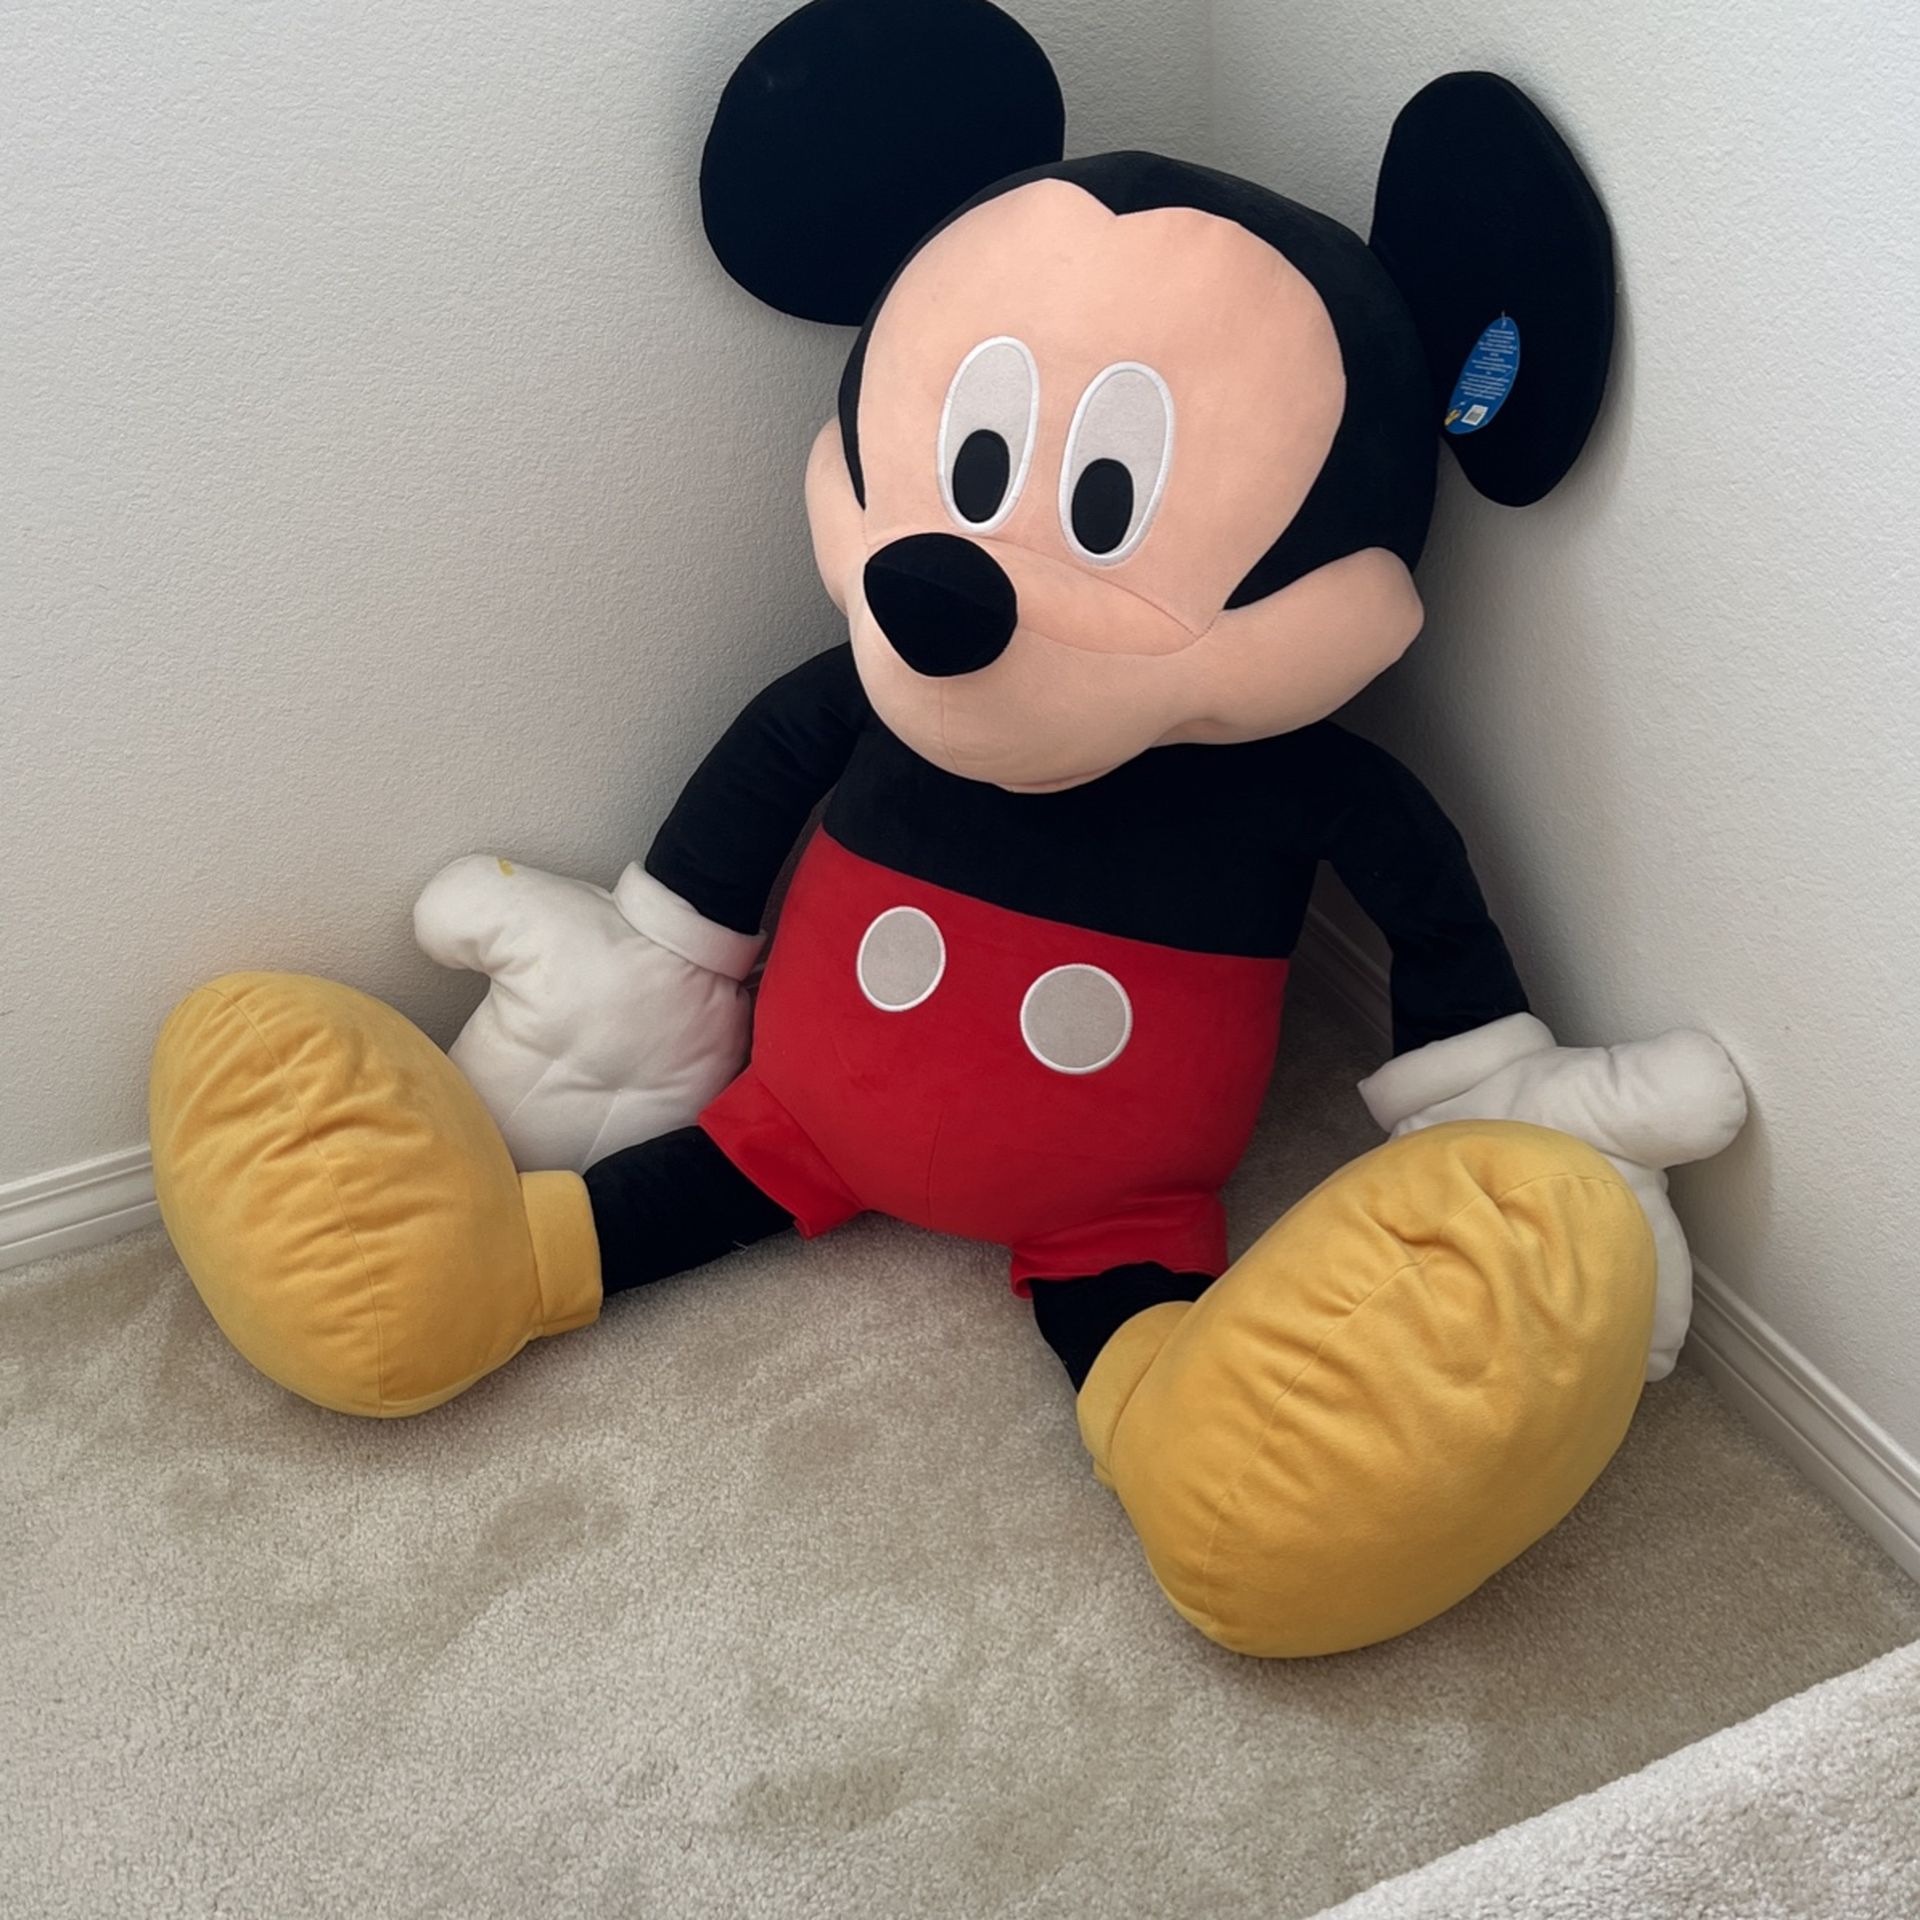 Mickey Mouse Disney Giant Size